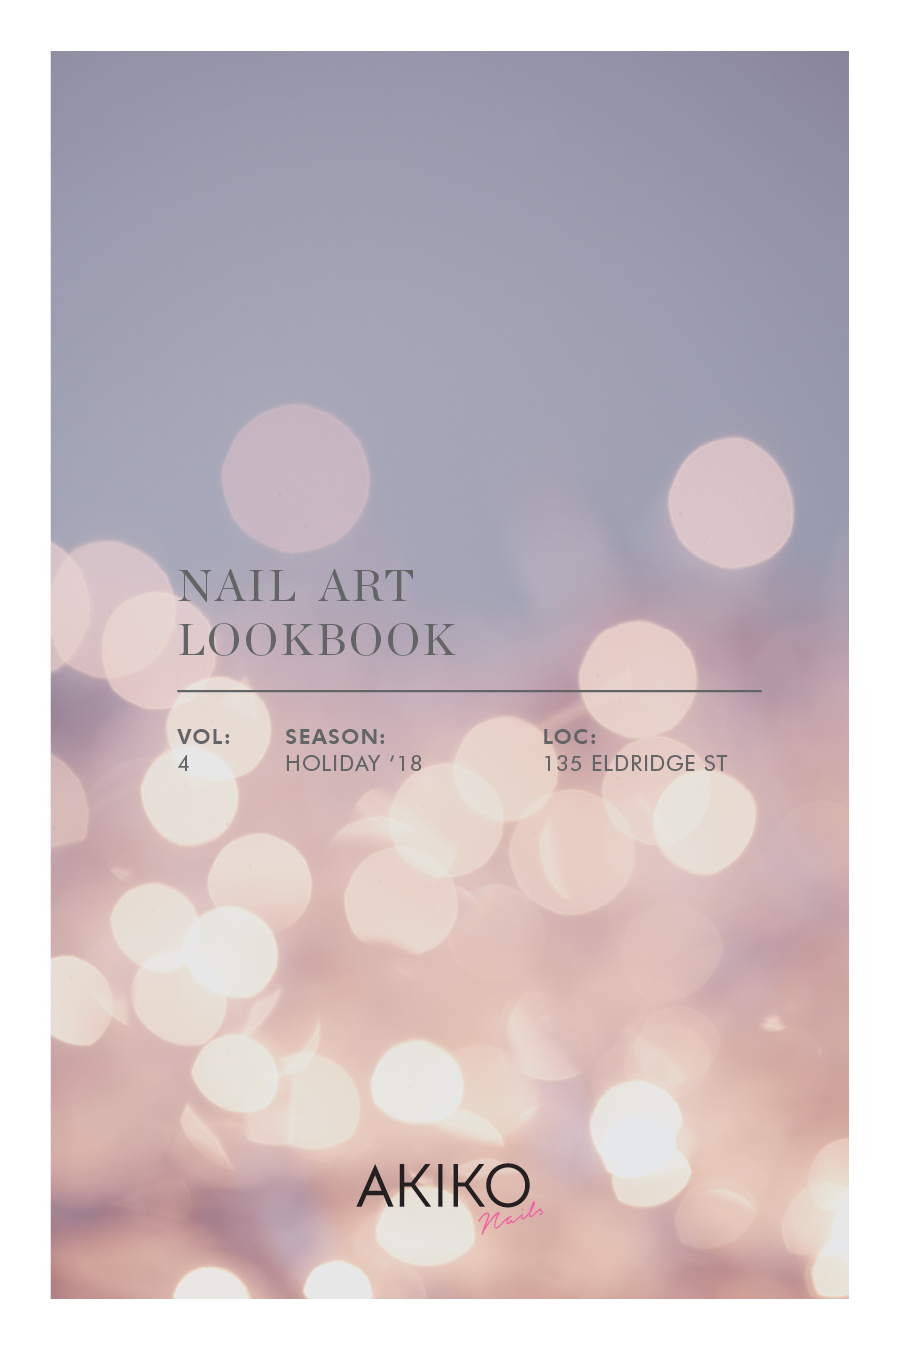 Akiko Nails holiday lookbook_final.jpg